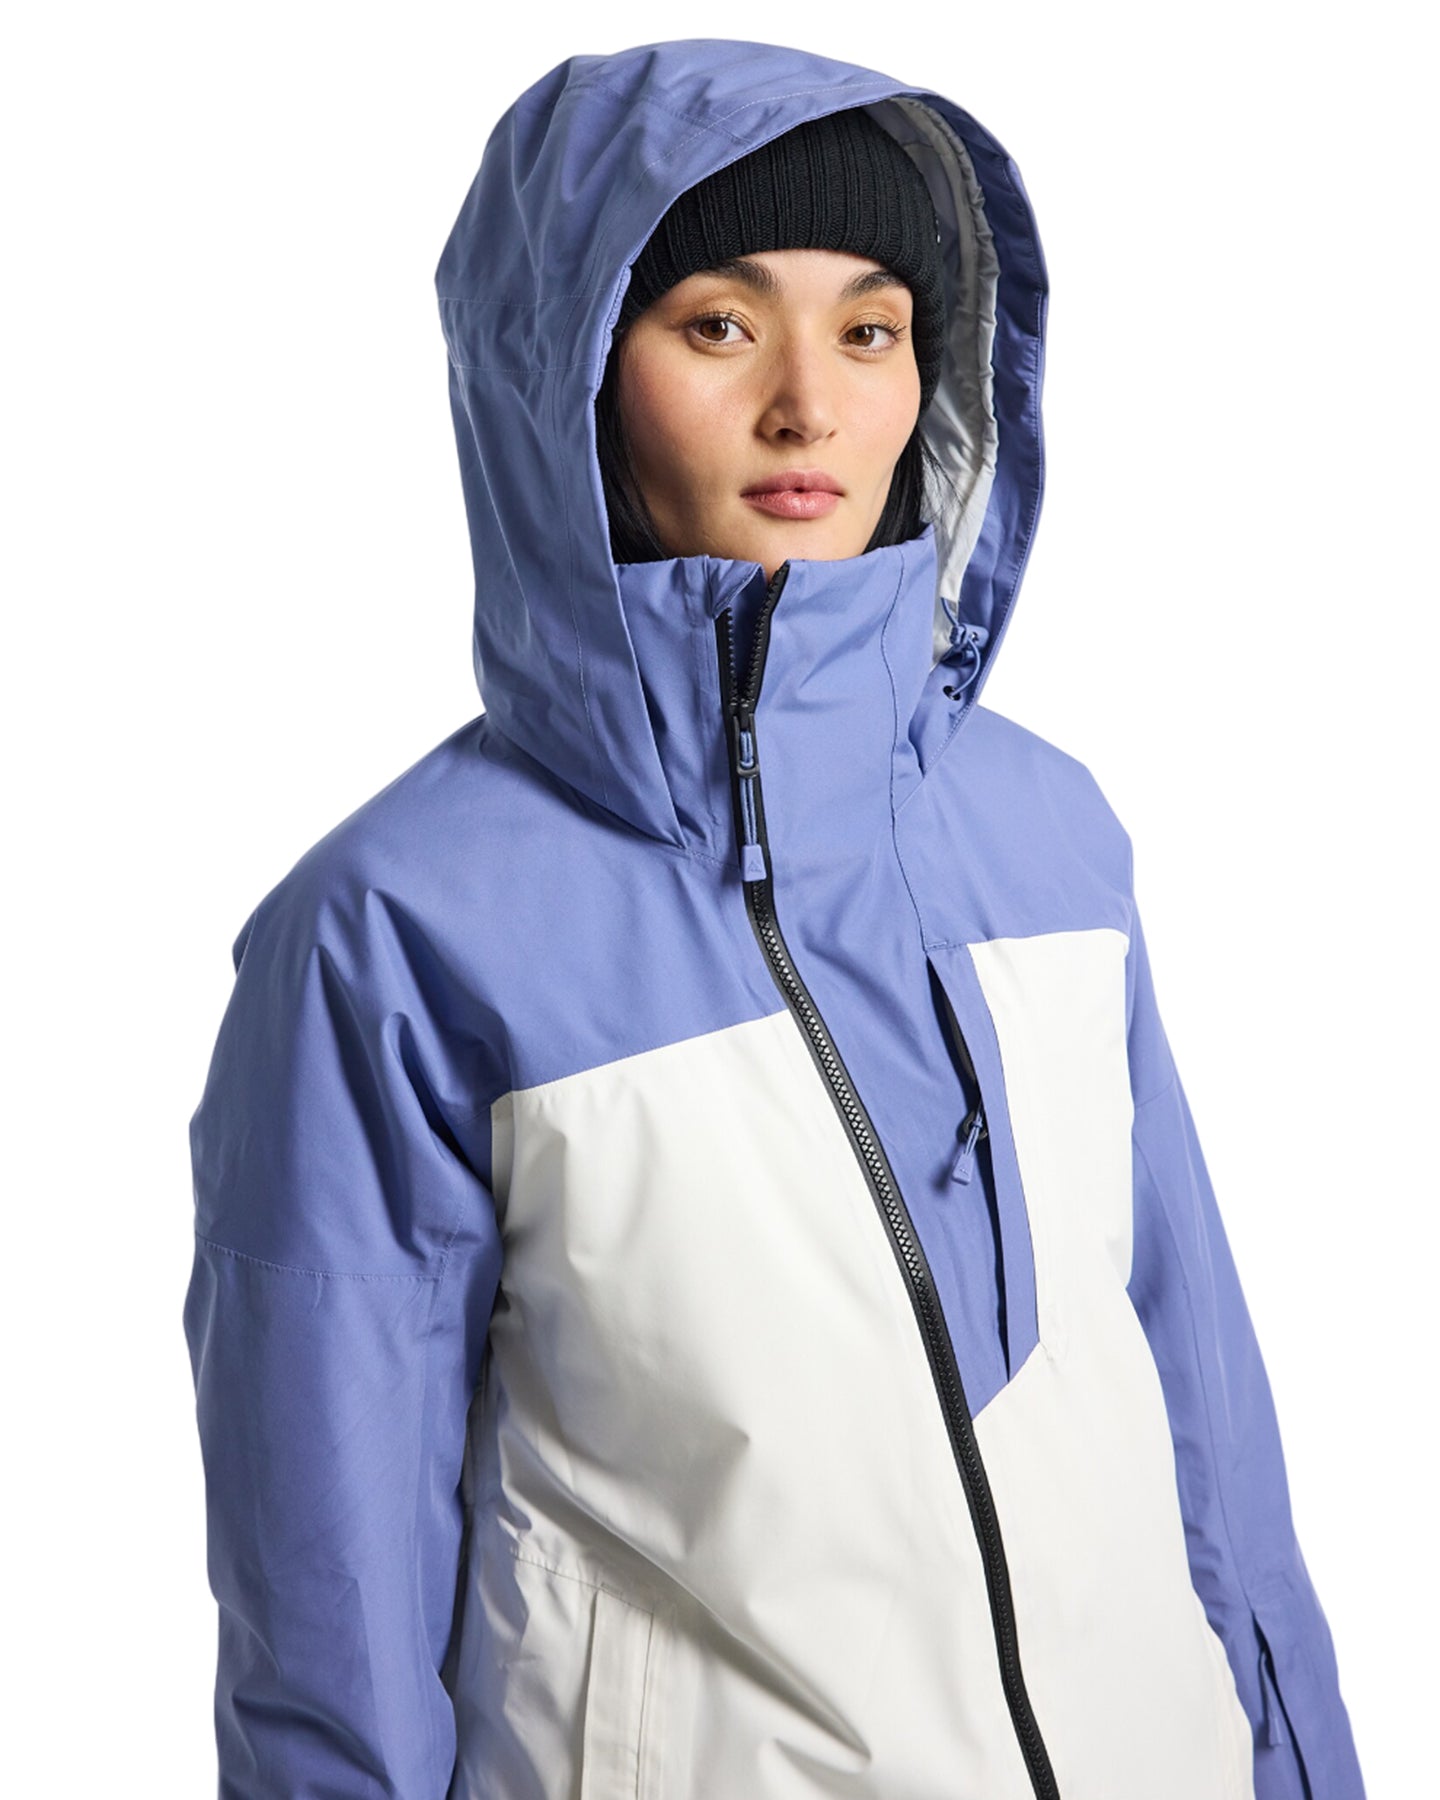 Burton Women's Pillowline Gore-Tex 2L Snow Jacket - Slate Blue/Stout White Women's Snow Jackets - Trojan Wake Ski Snow